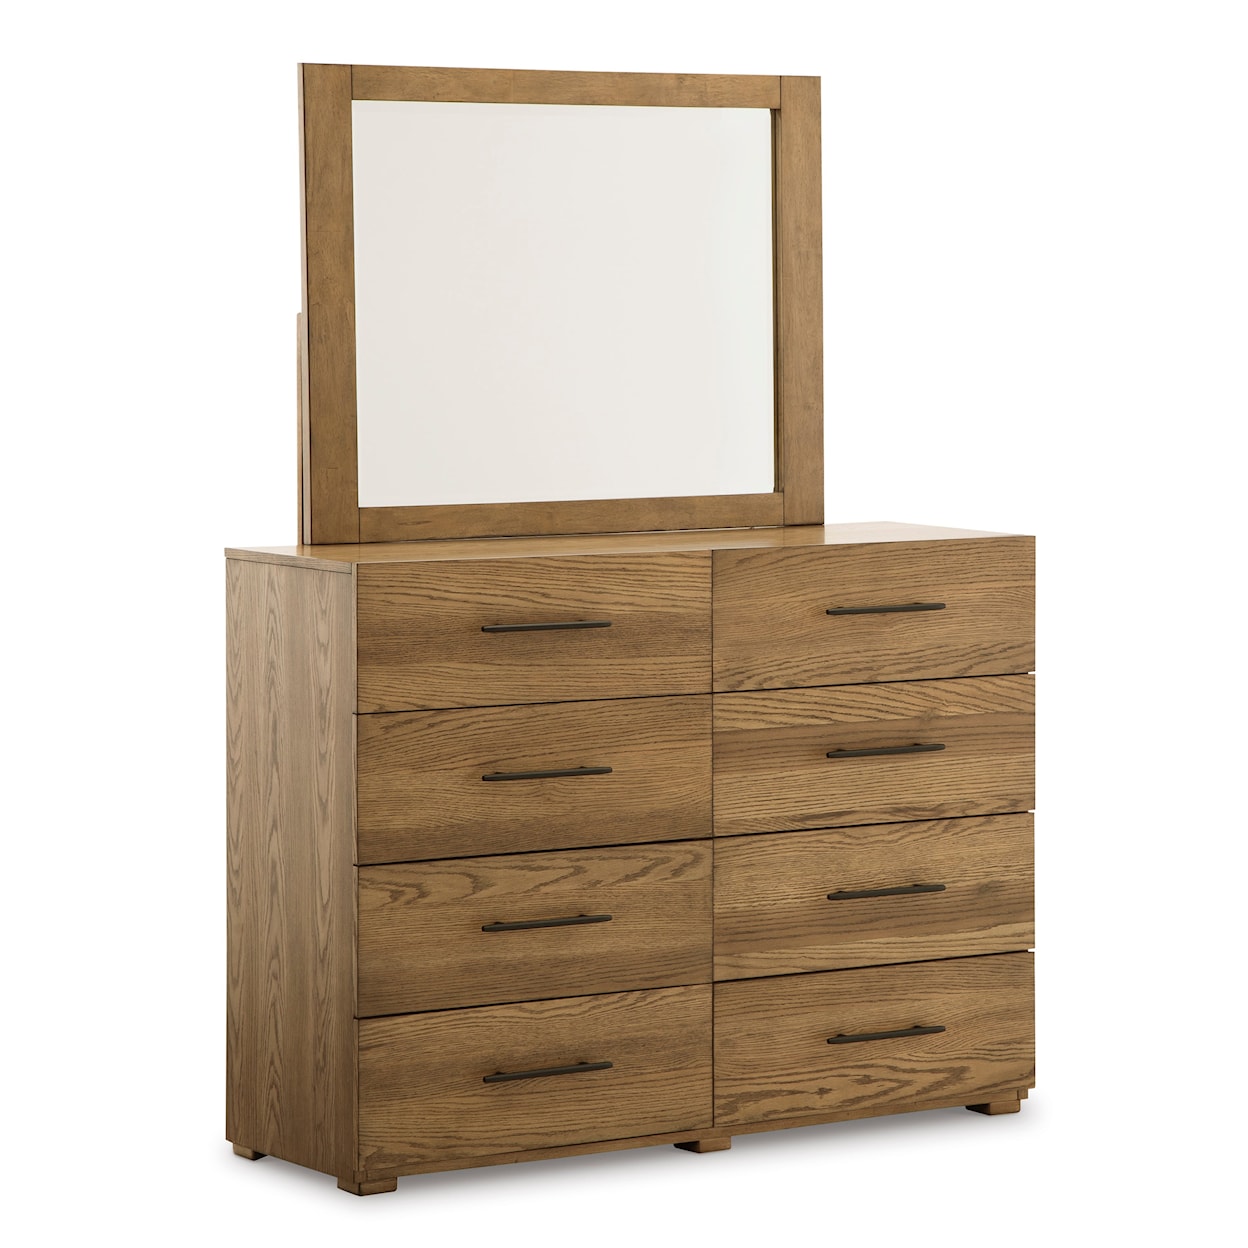 Ashley Furniture Signature Design Dakmore Dresser and Mirror